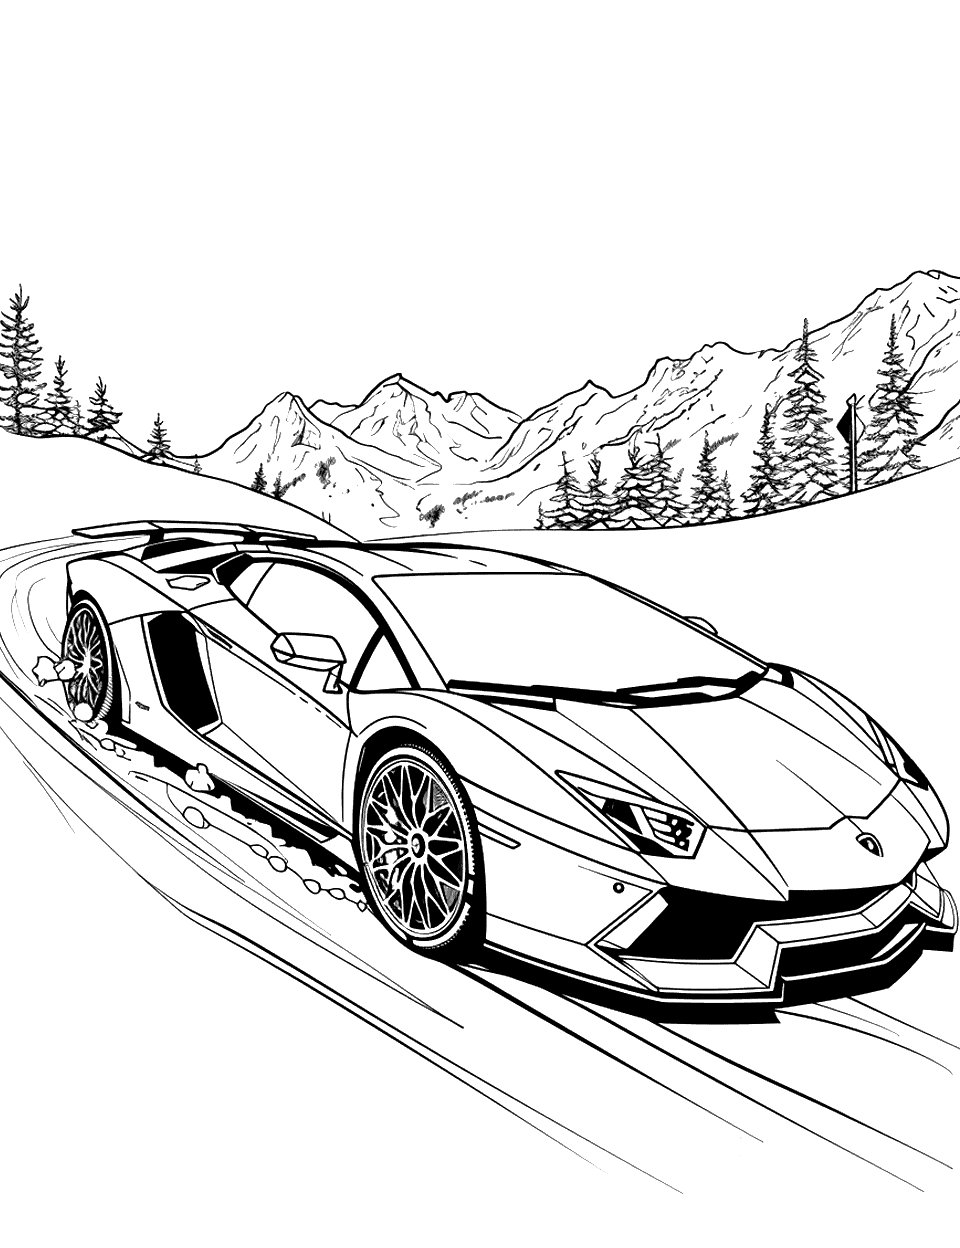 Snowy Lamborghini Drift Coloring Page - A Lamborghini performing a drift on a snowy road.